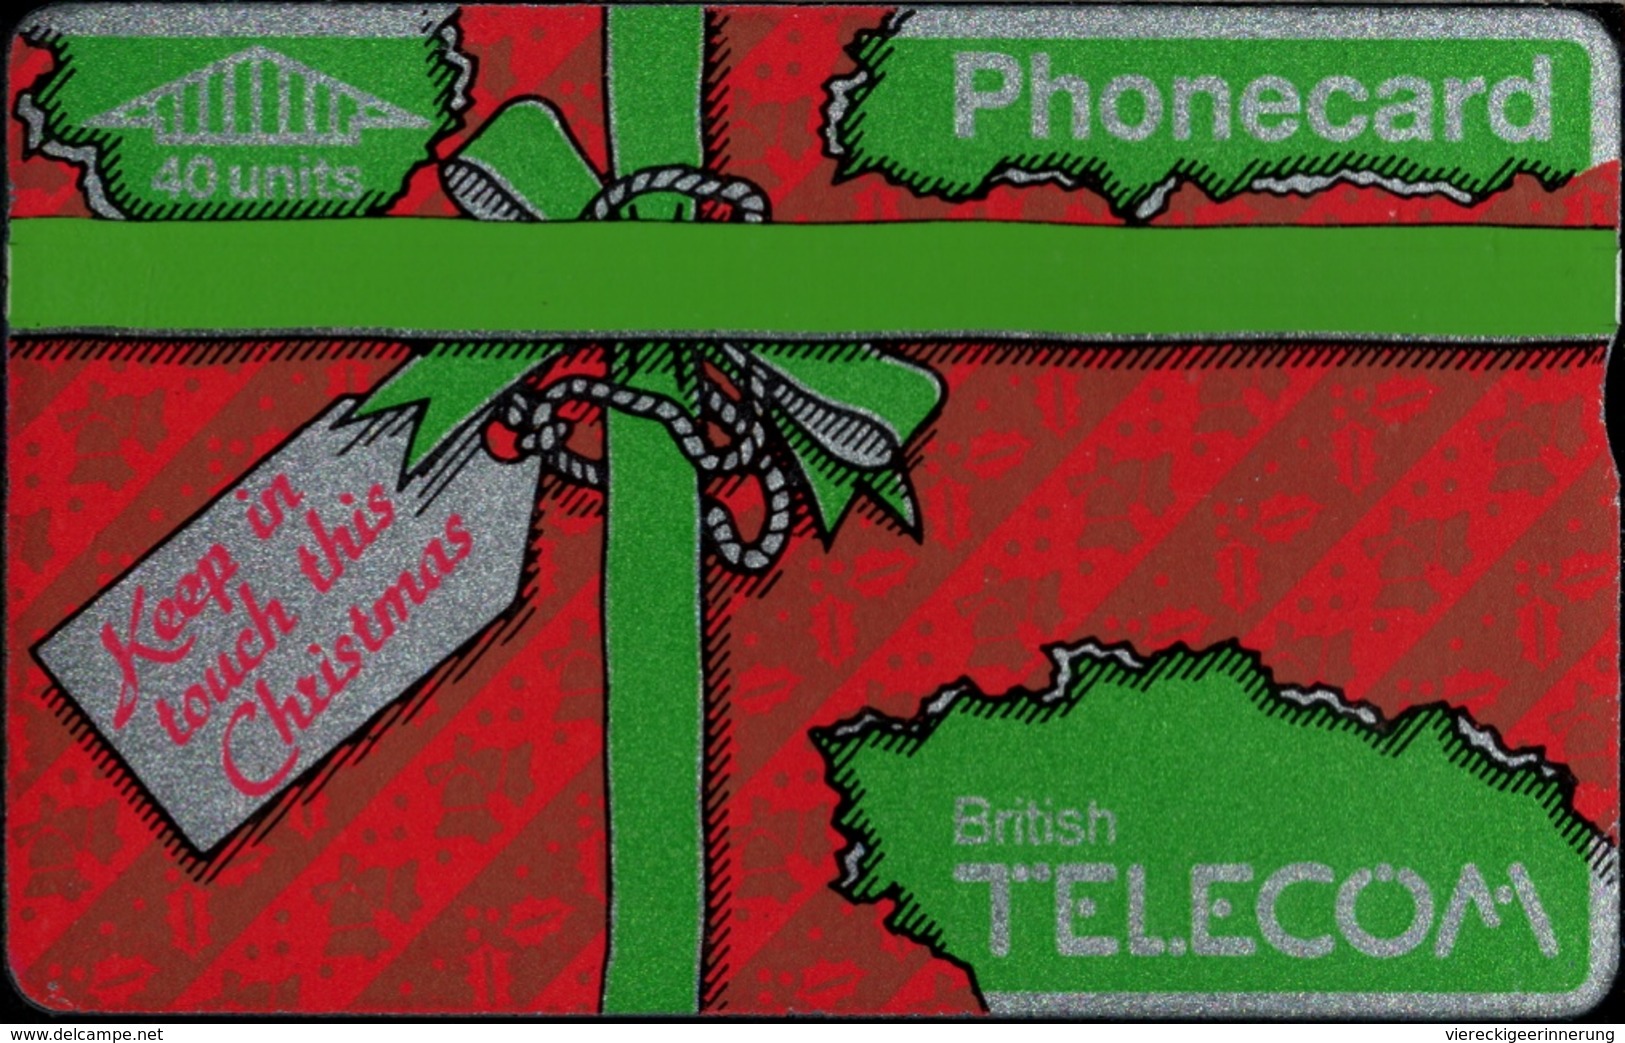 ! Telefonkarte, Old Phonecard,  United Kingdom, British Telecom, Christmas, Weihnachten - BT Kaarten Voor Hele Wereld (Vooraf Betaald)